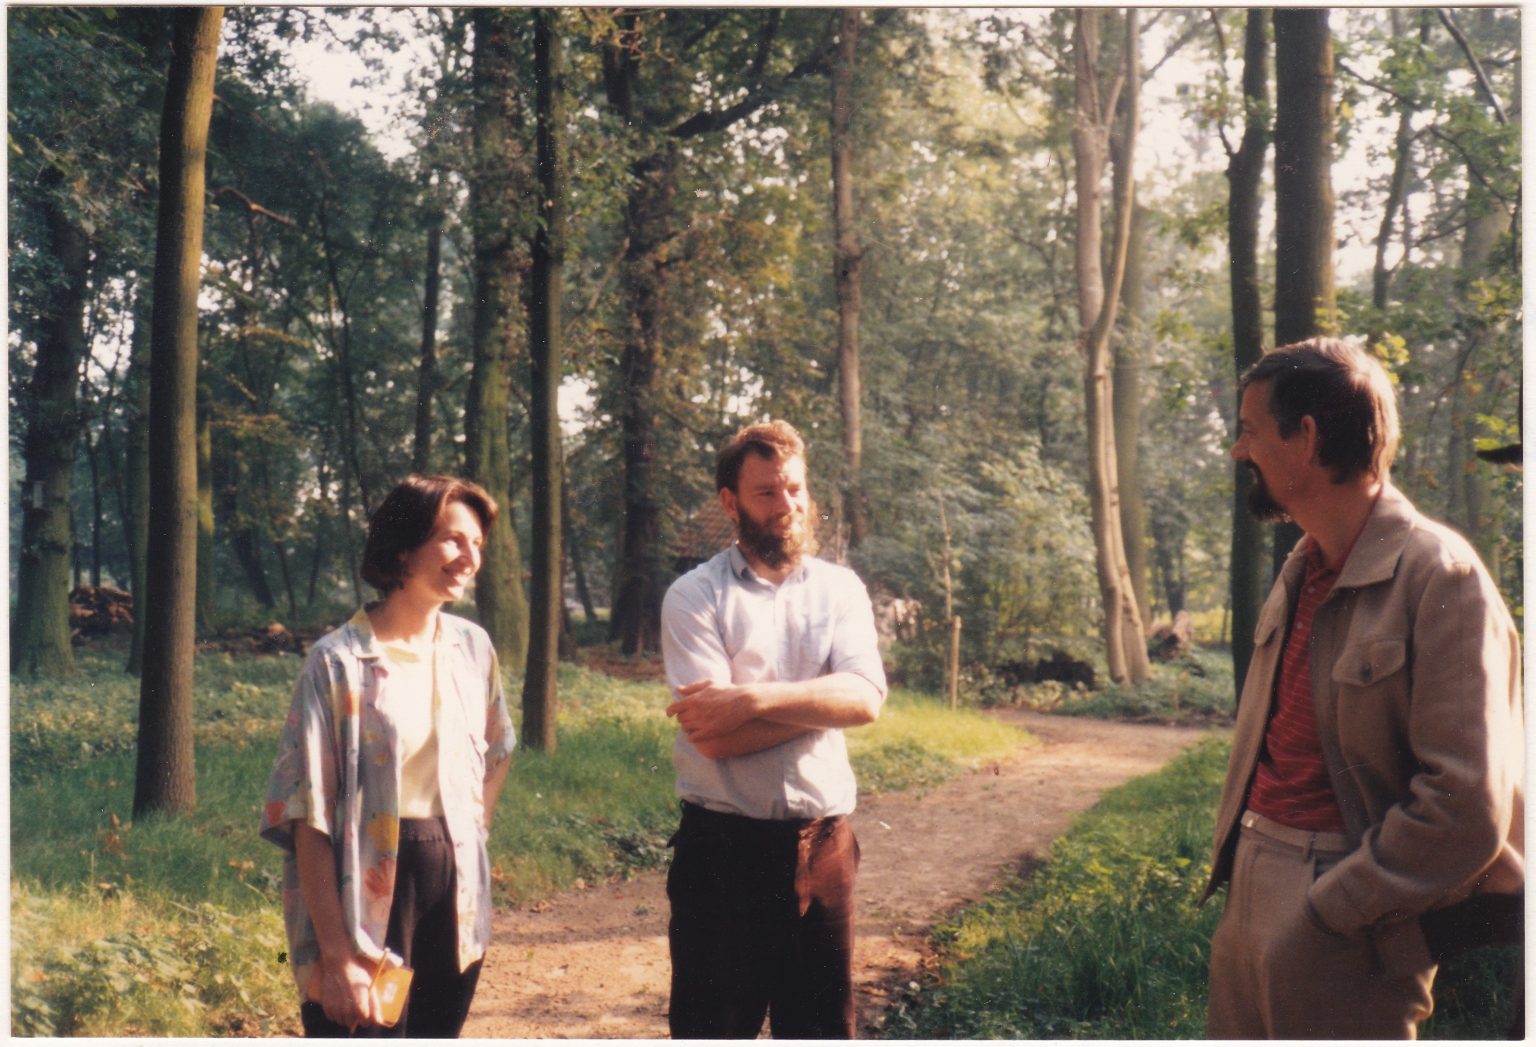 Finette visiting Wester-Amstel's grounds (1985)